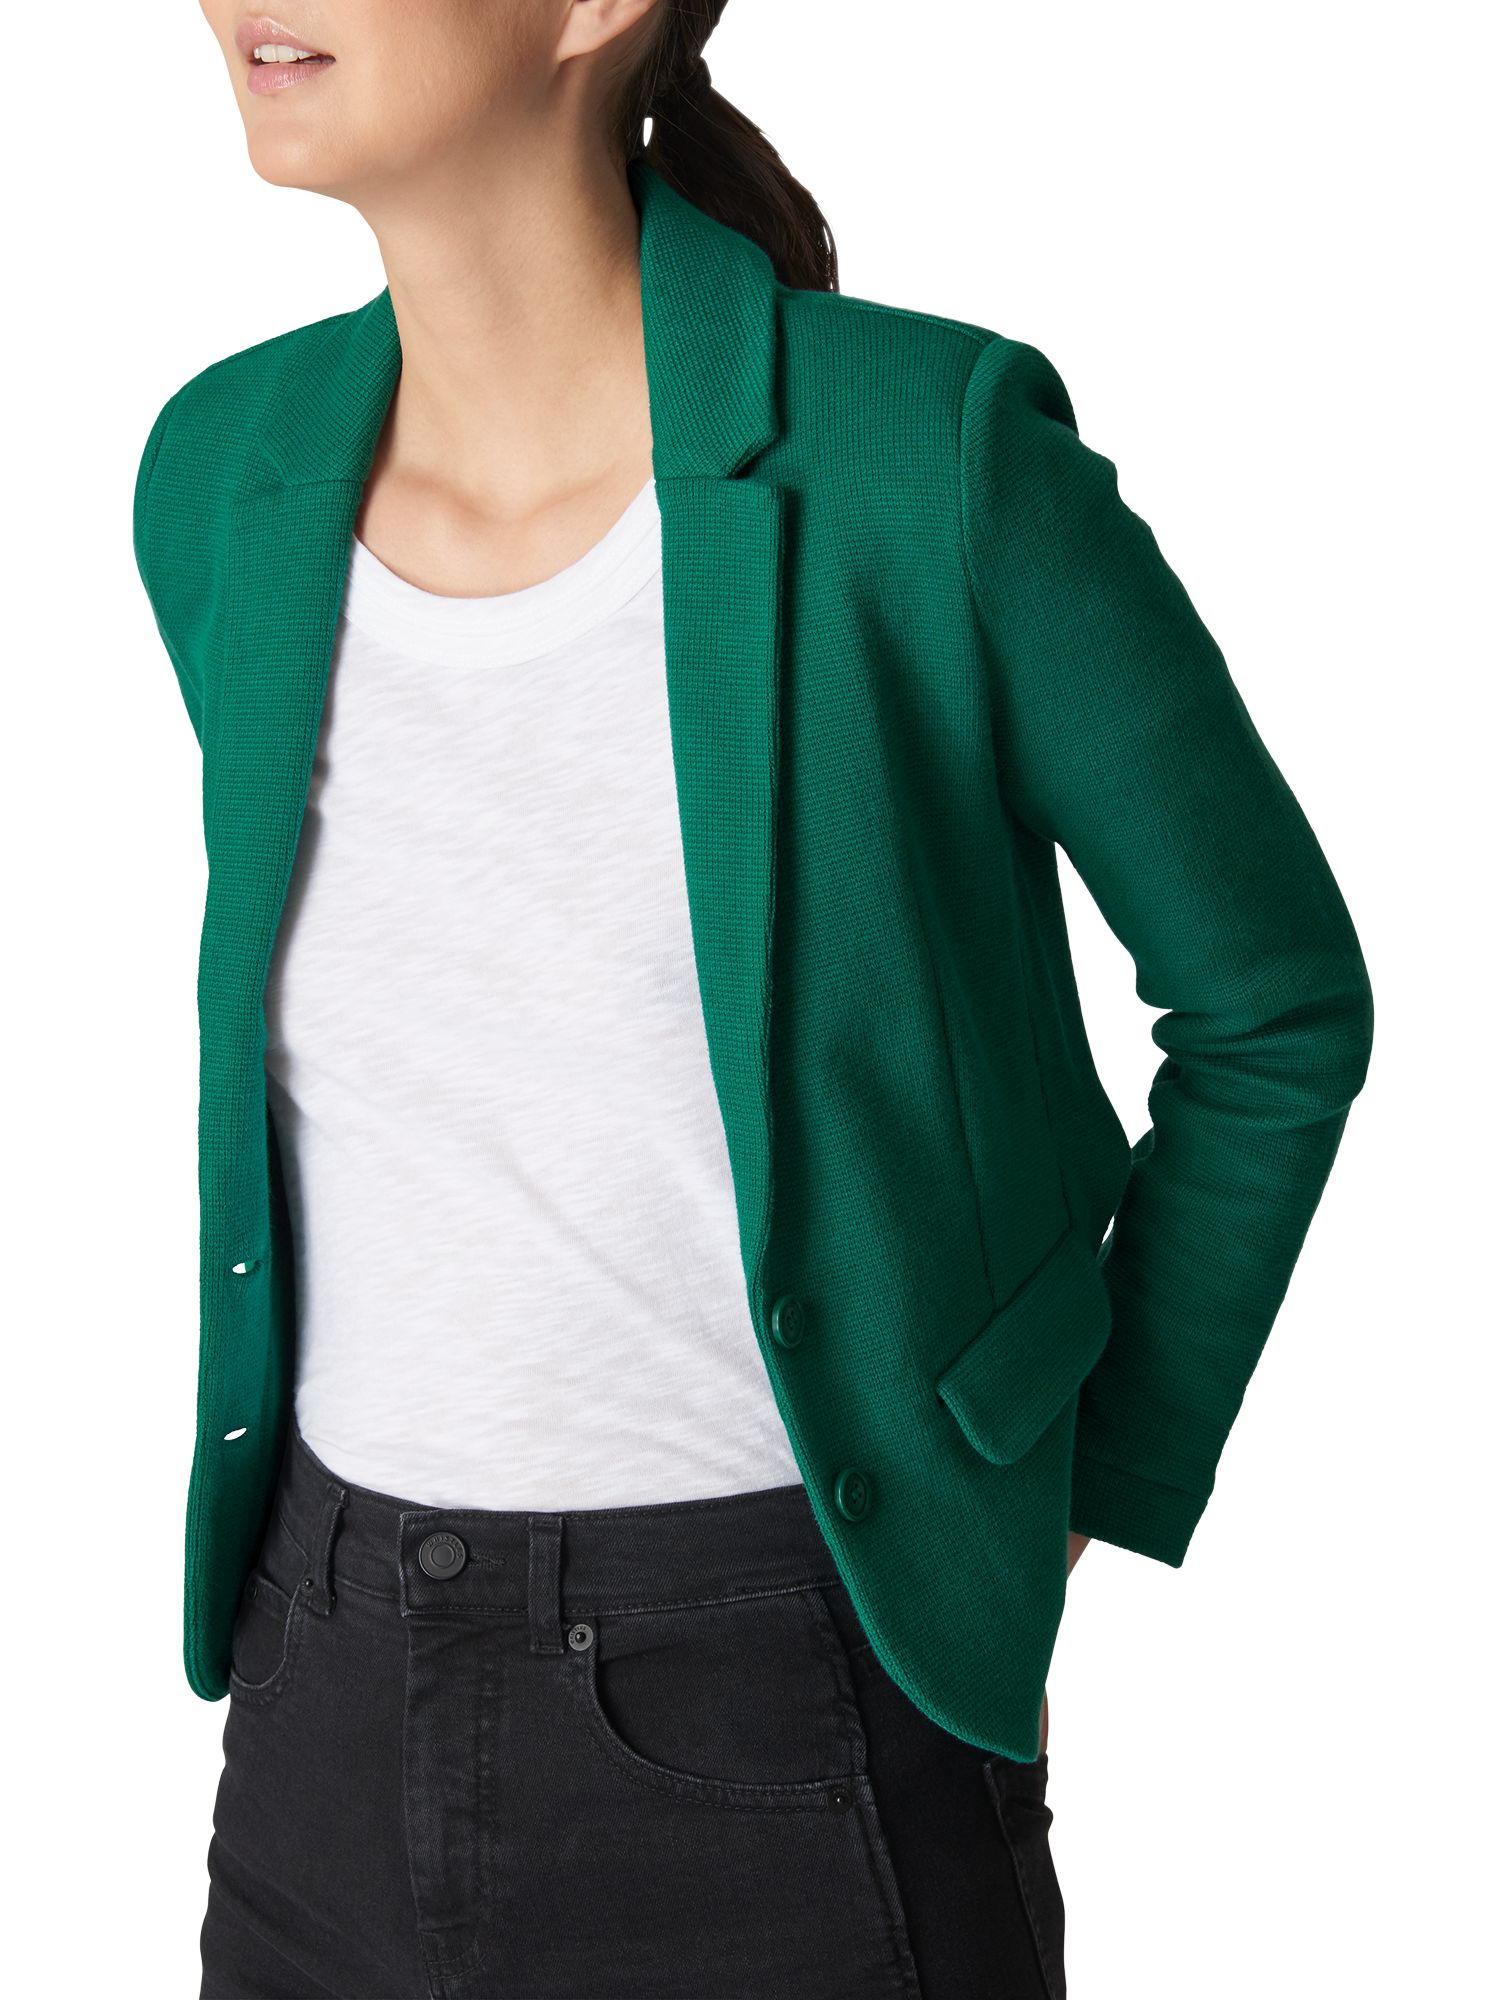 green jersey jacket